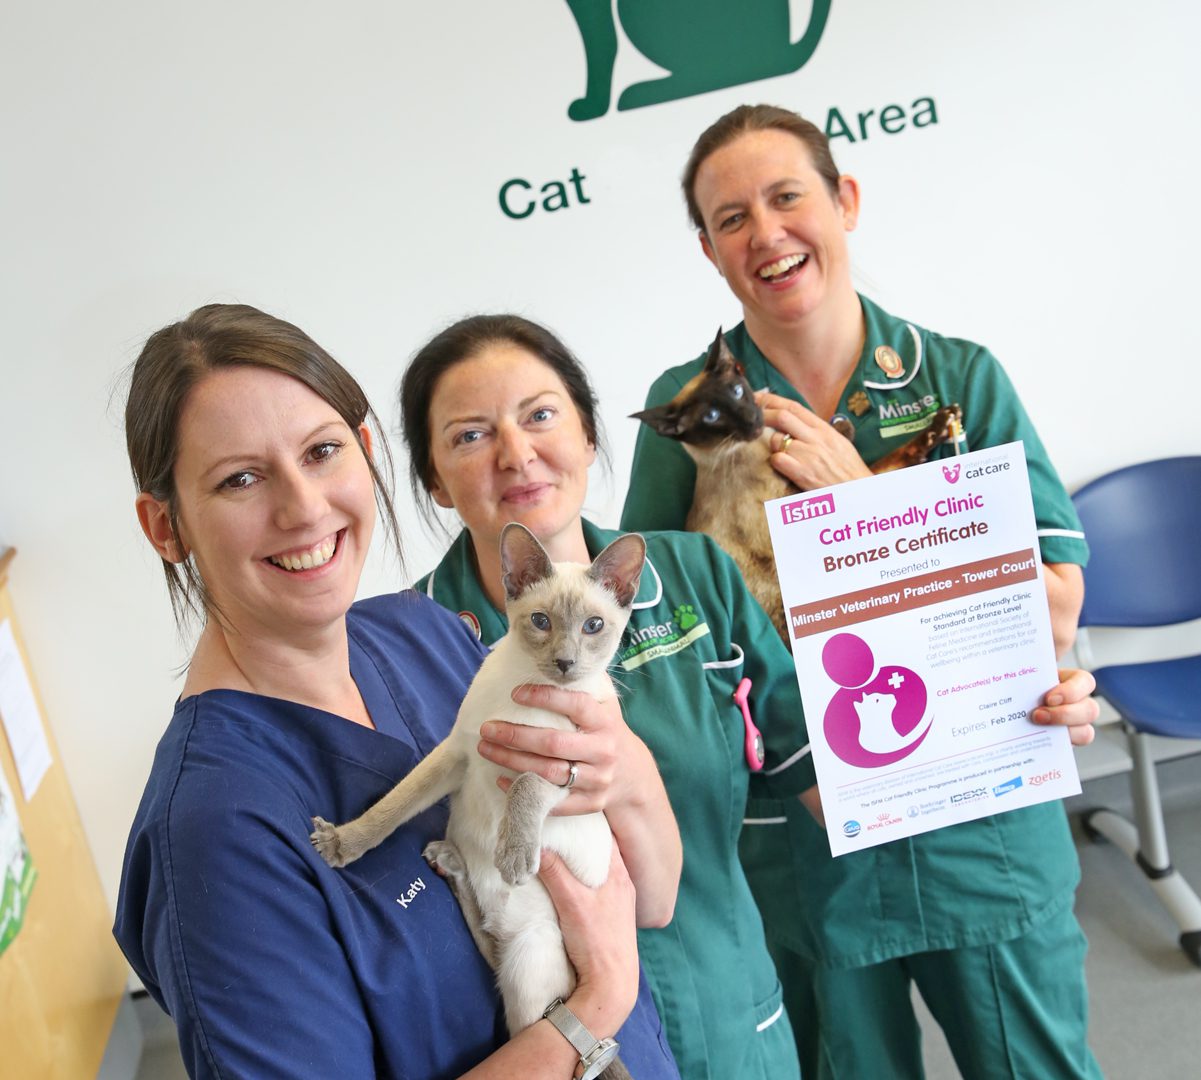 Cats think York vet practice is purr-fect haven